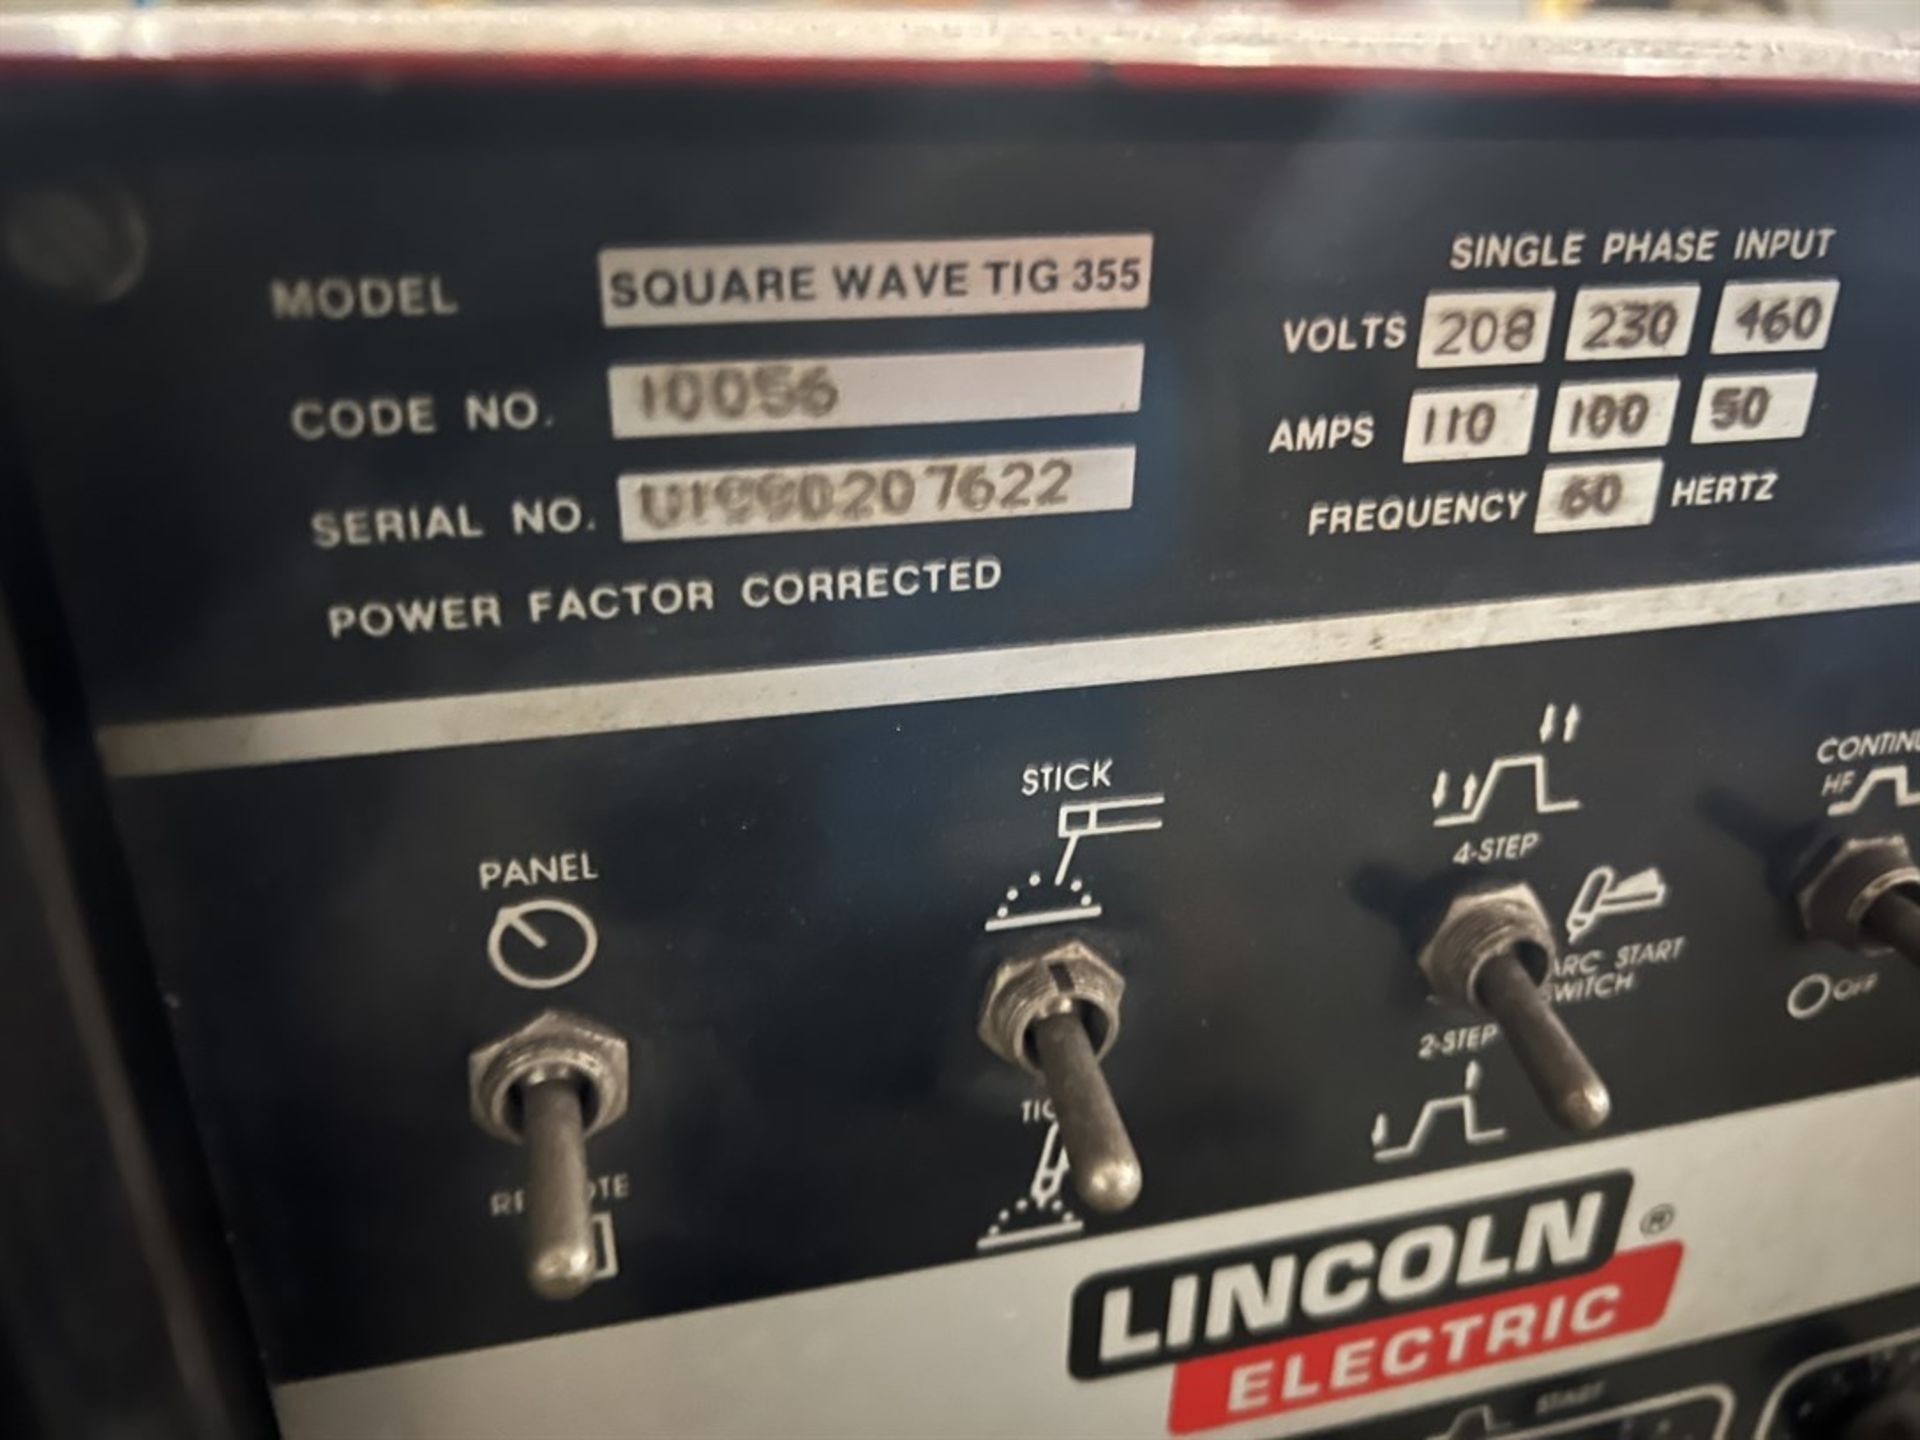 LINCOLN Square Wave TIG-355 Tig Welder, s/n UI990207622 (Building 5) - Image 4 of 4